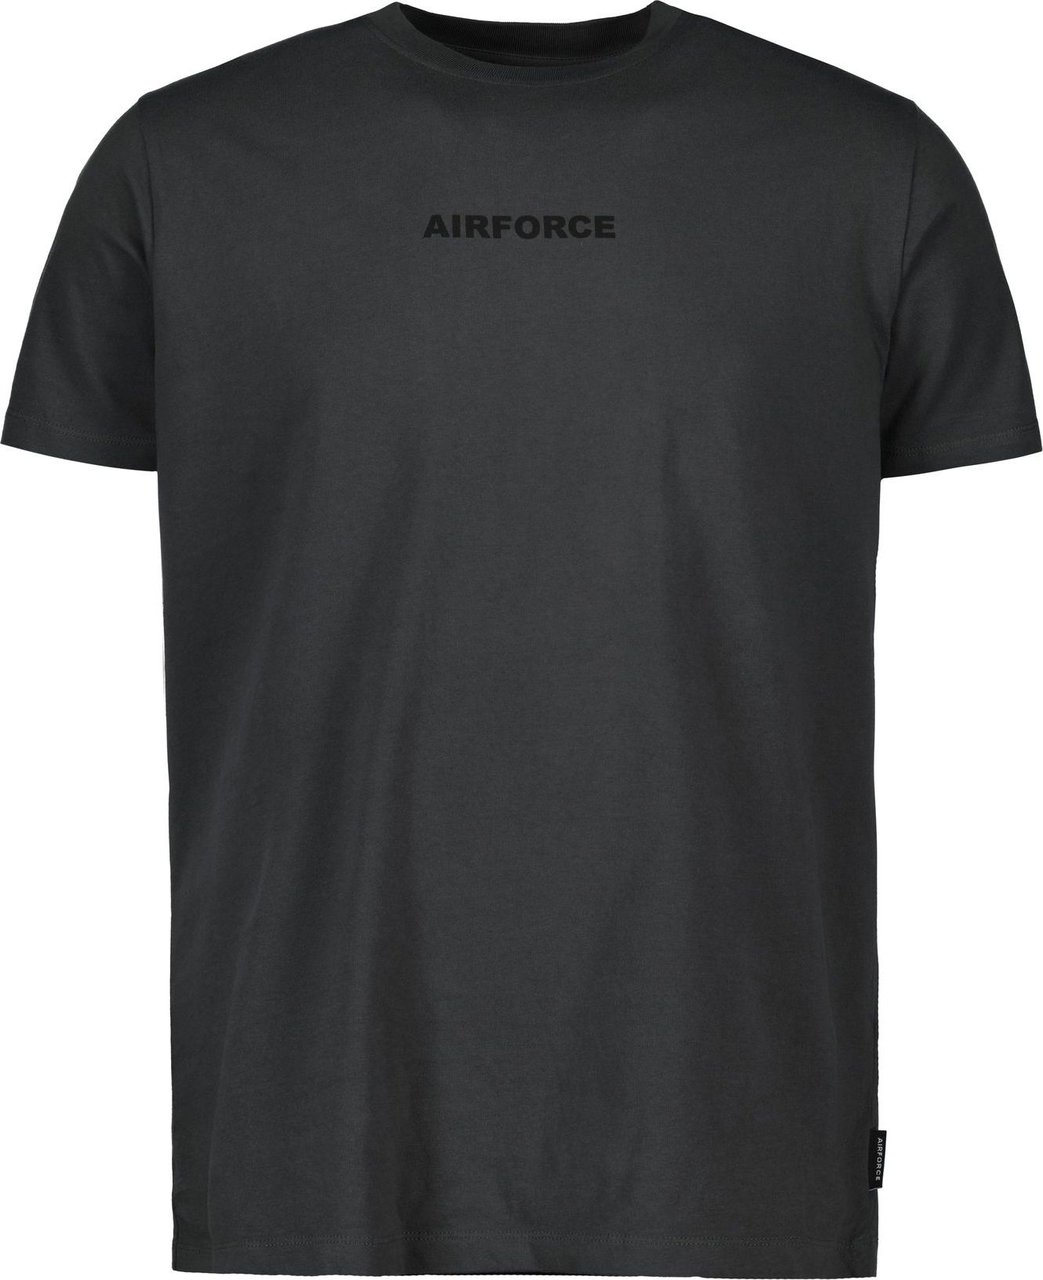 Airforce Airforce Wording/logo T-shirt Grijs